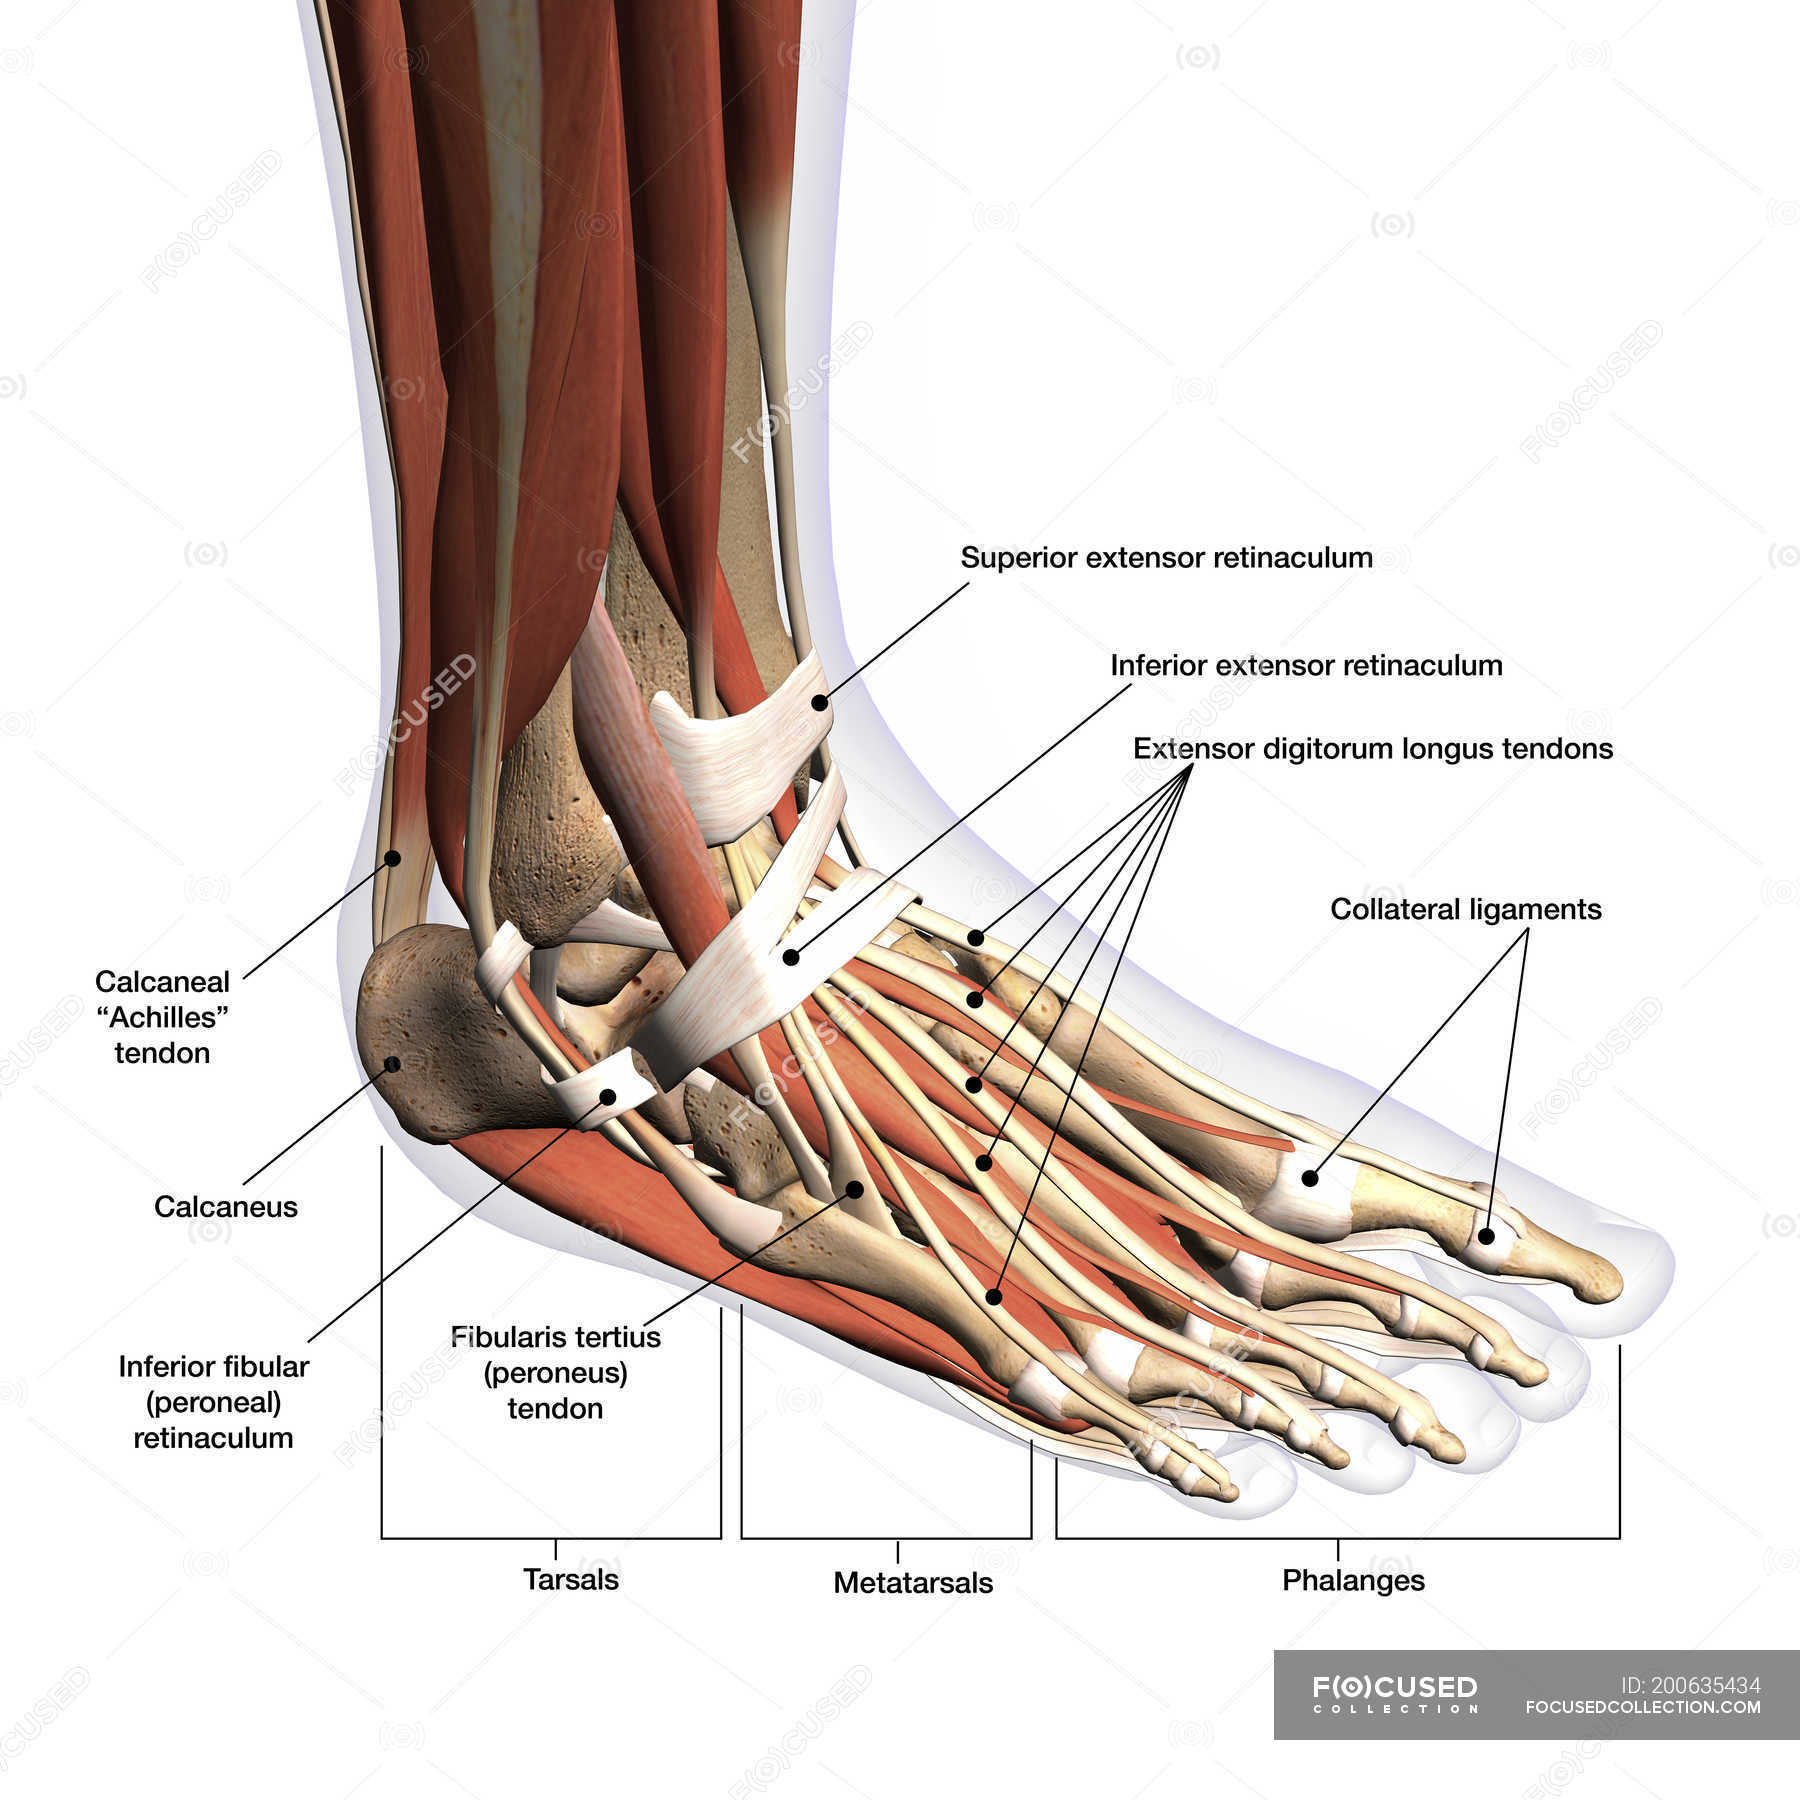 [DIAGRAM] Anatomical Diagram Of Foot - MYDIAGRAM.ONLINE